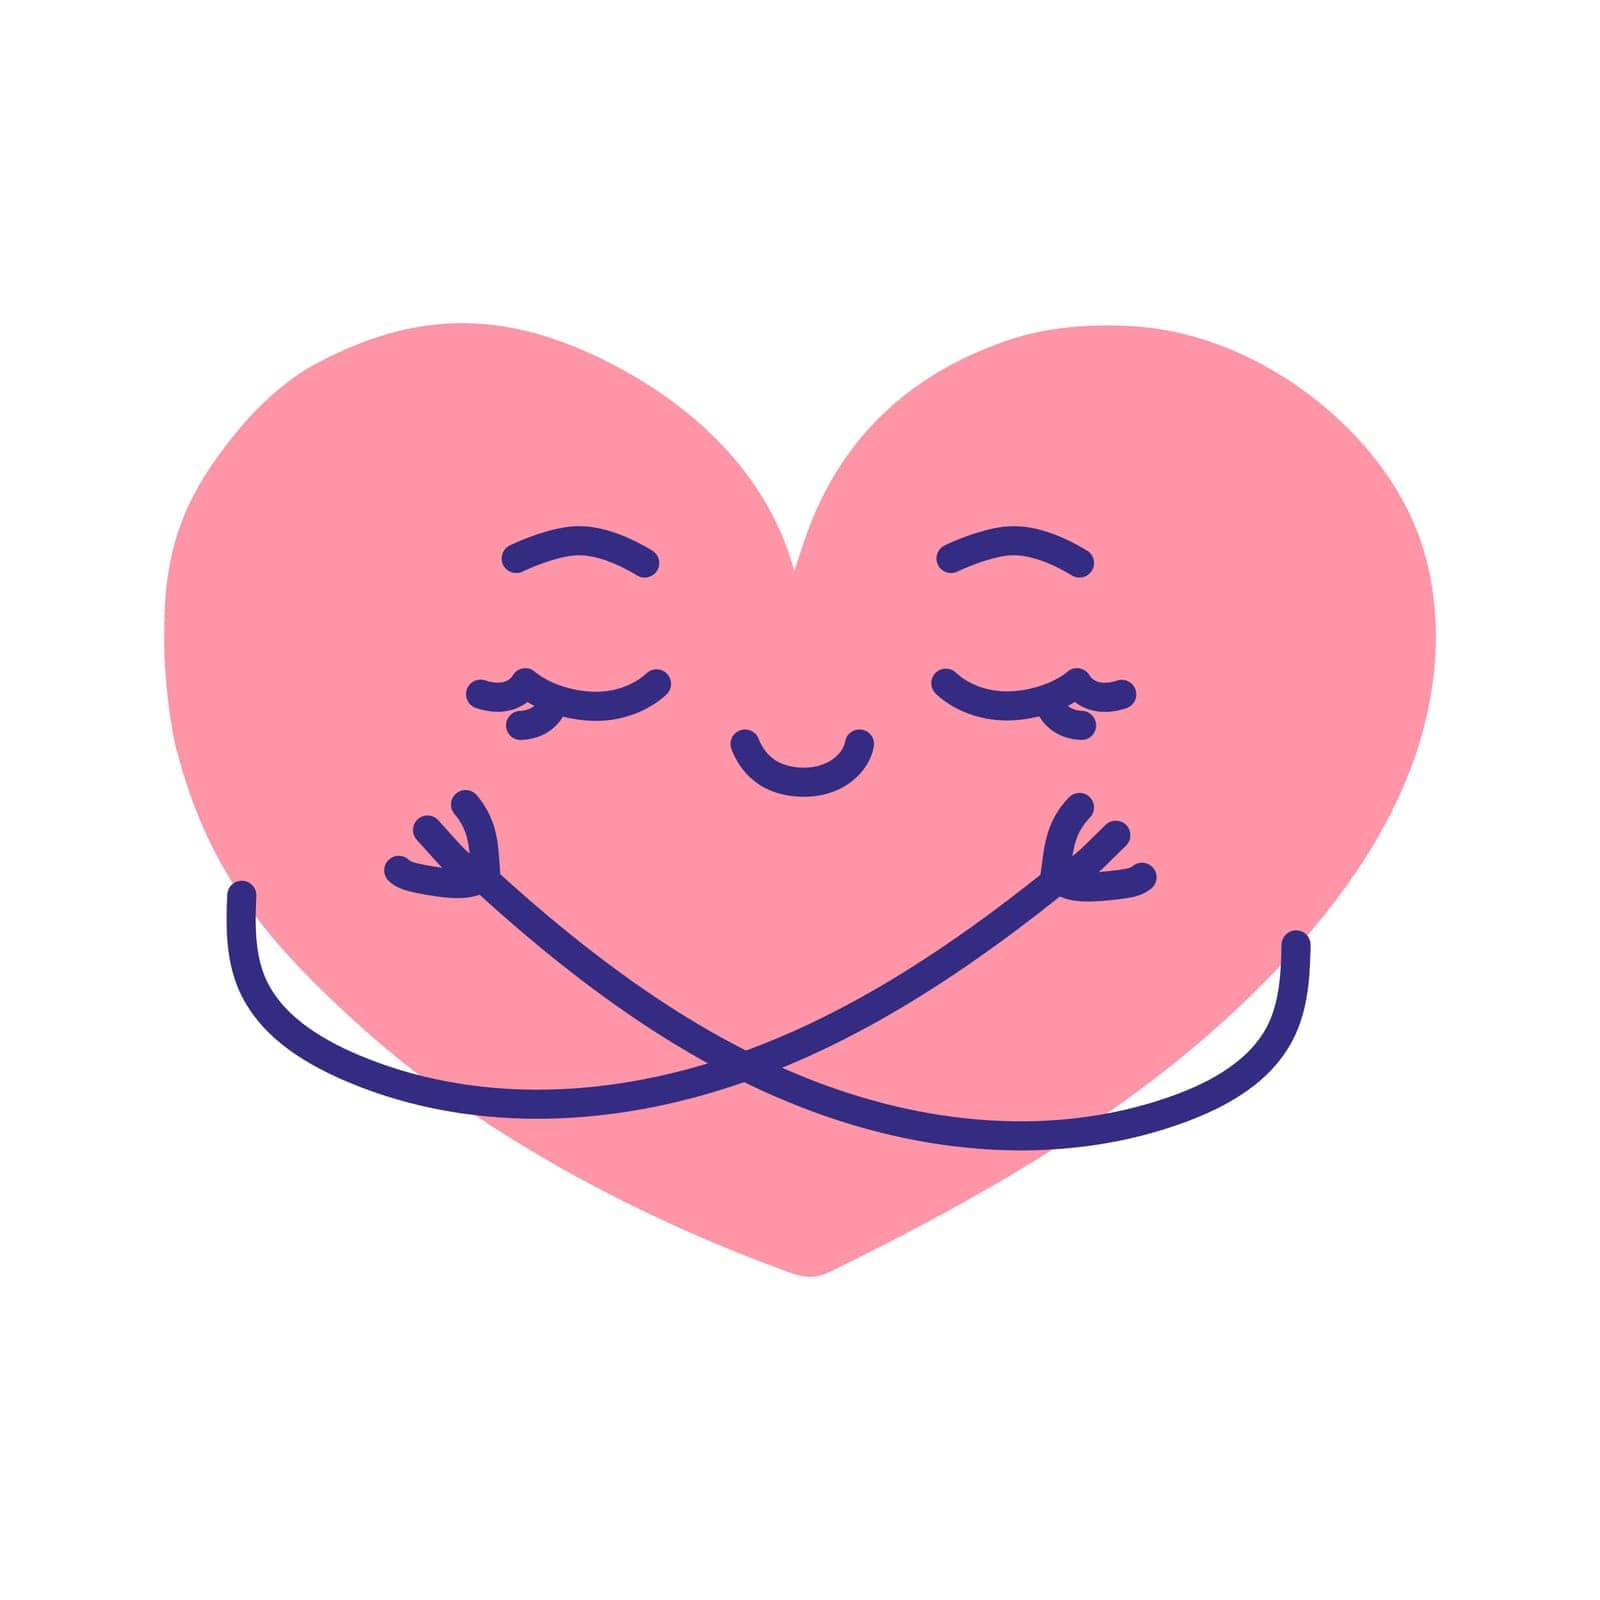 Heart hugging itself. Self care, love yourself concept vector illustration. International Women day card.